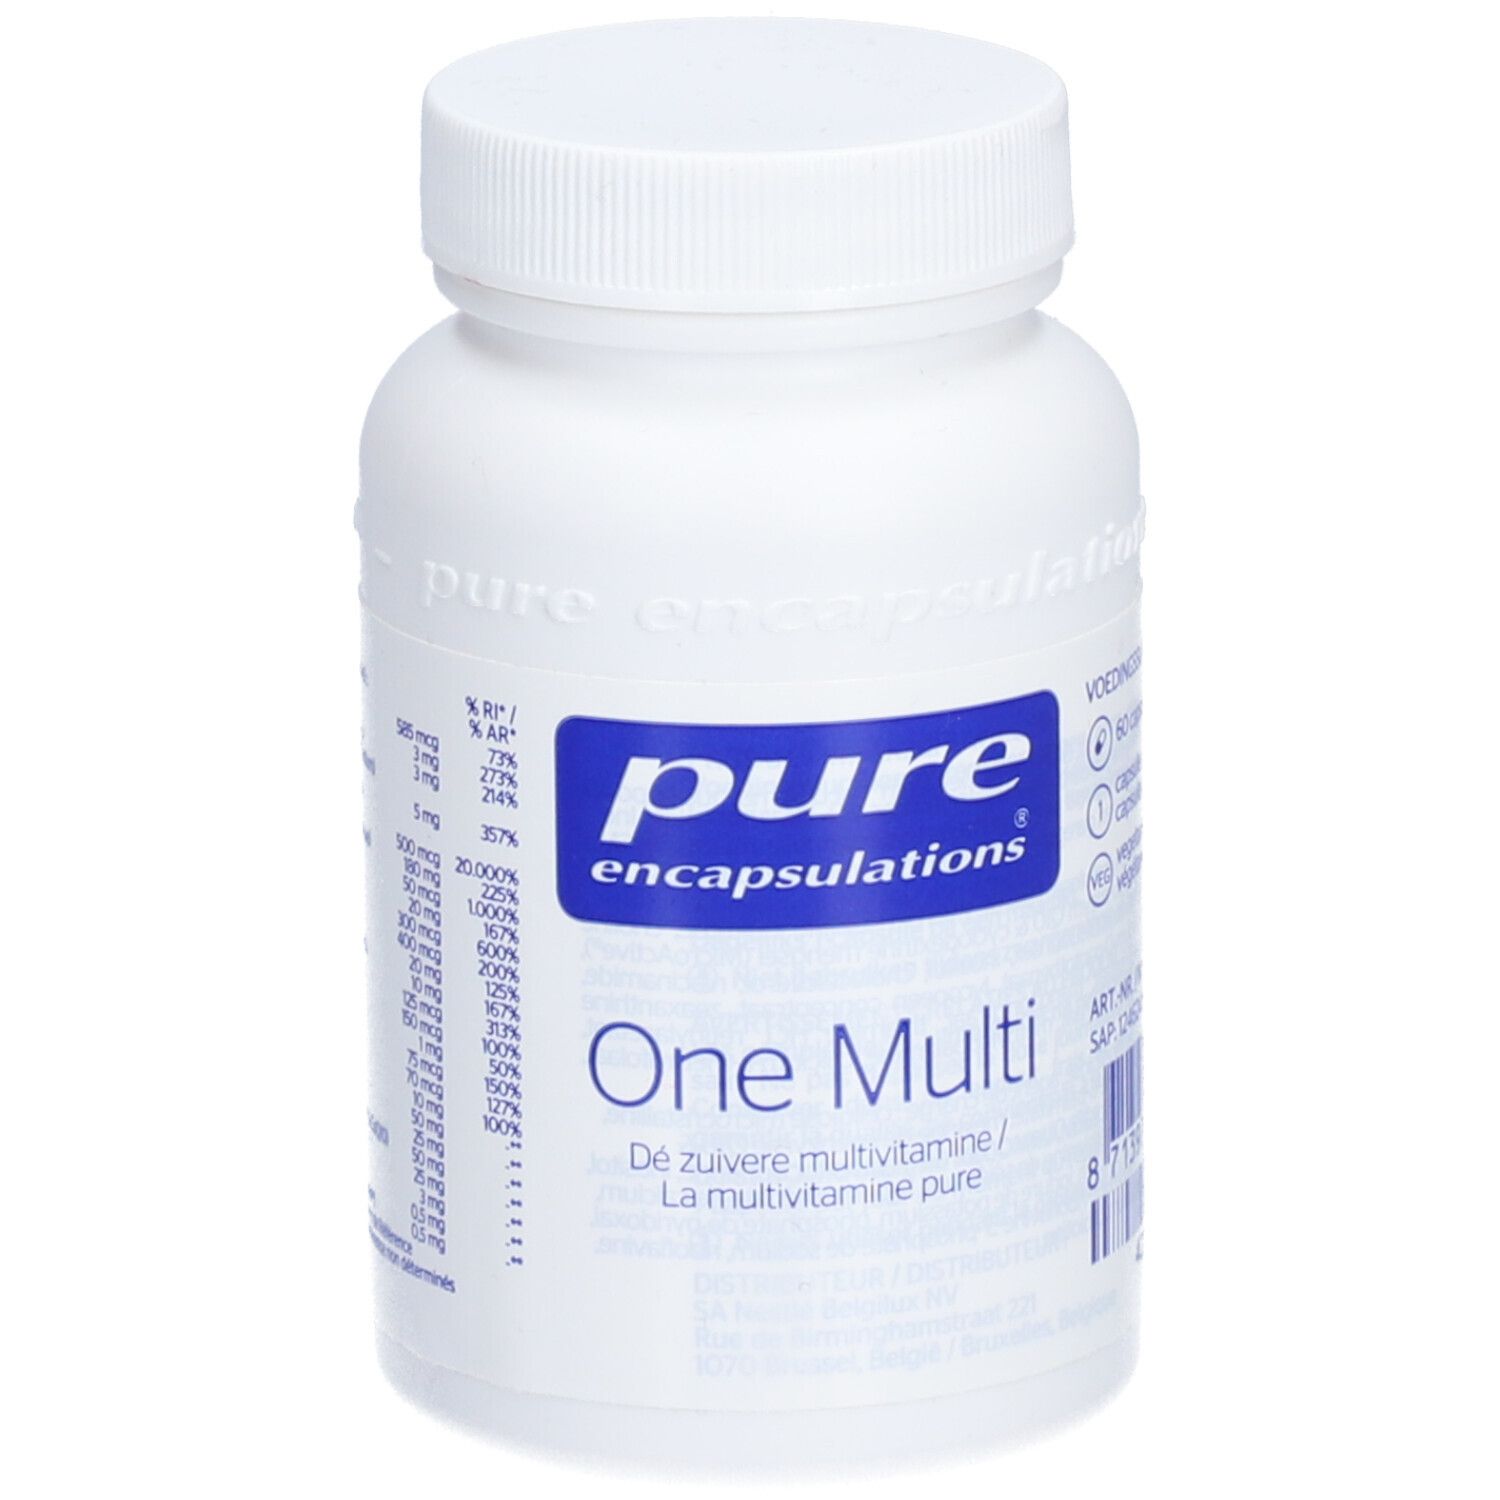 pure encapsulations® One Multi